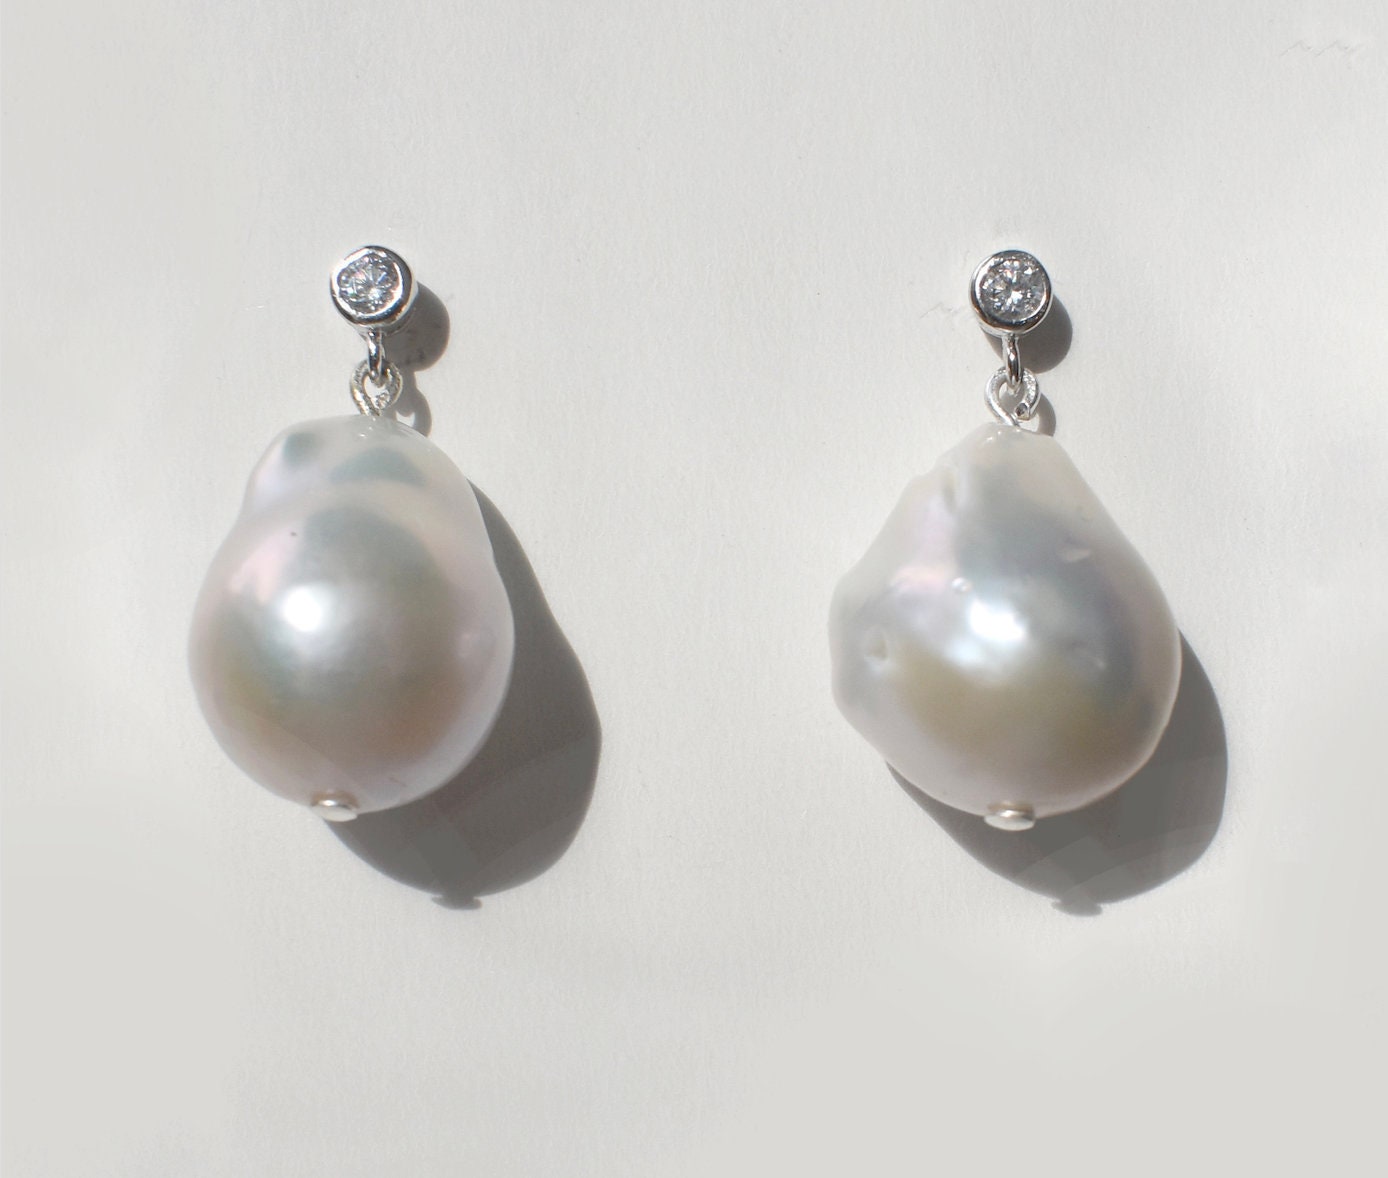 MORNING STAR earrings Baroque pearl earrings gold pearl | Etsy